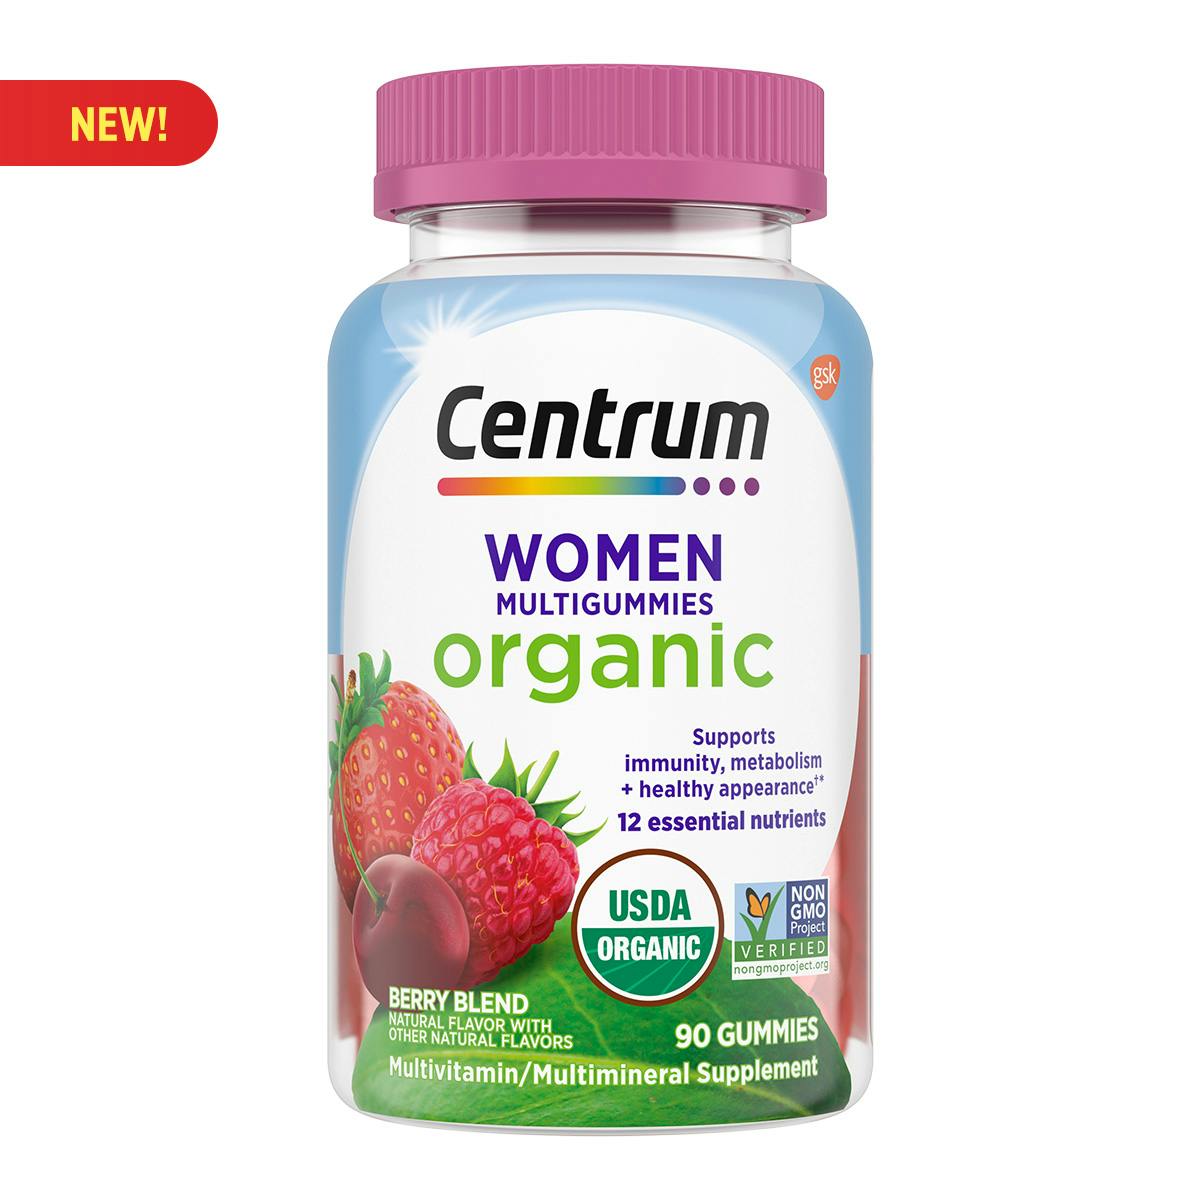 Centrum Organic Women Multigummies